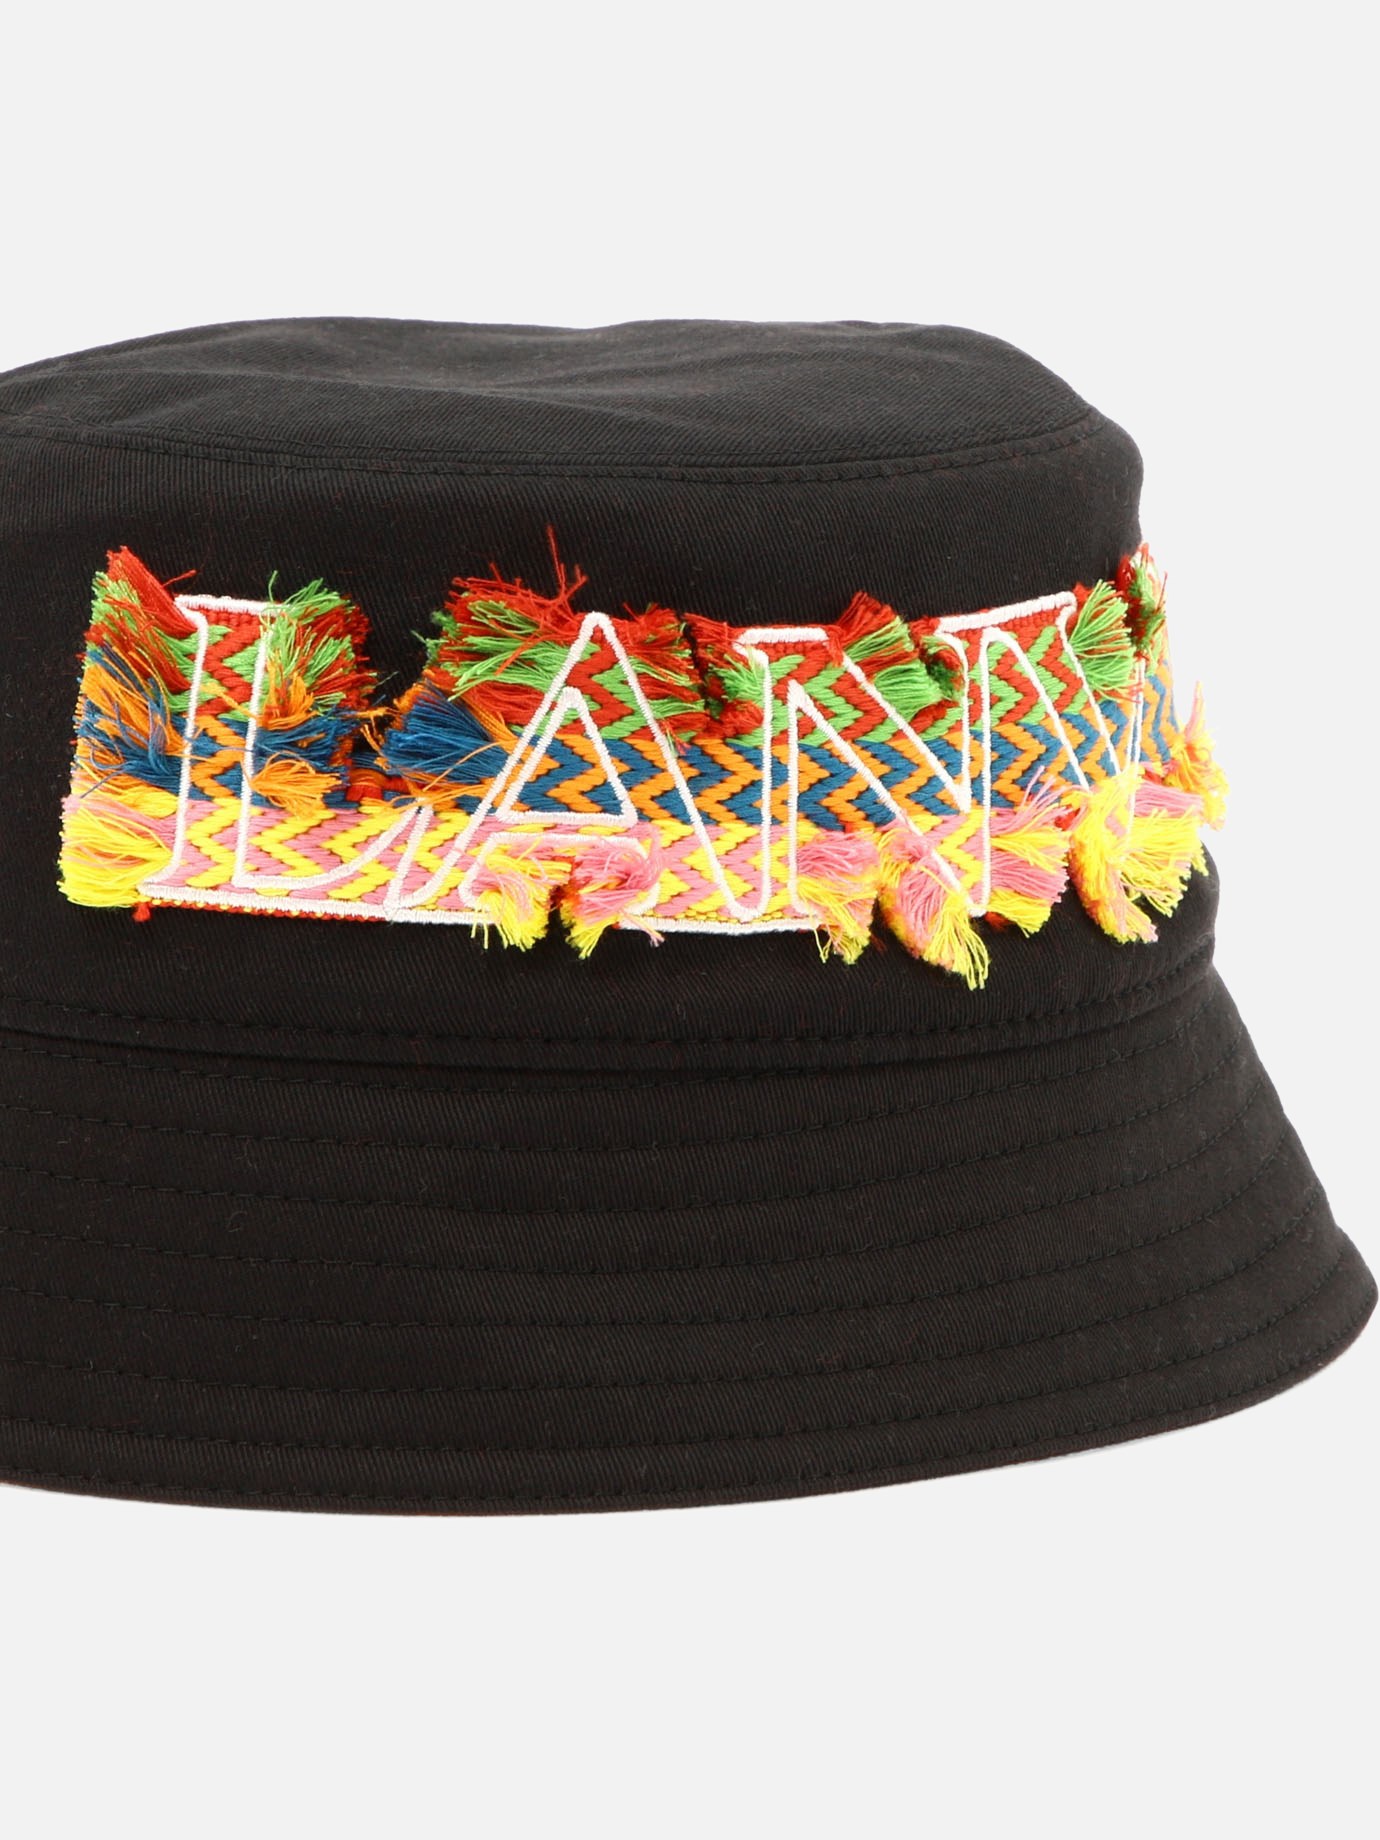  Curb  bucket hat by Lanvin